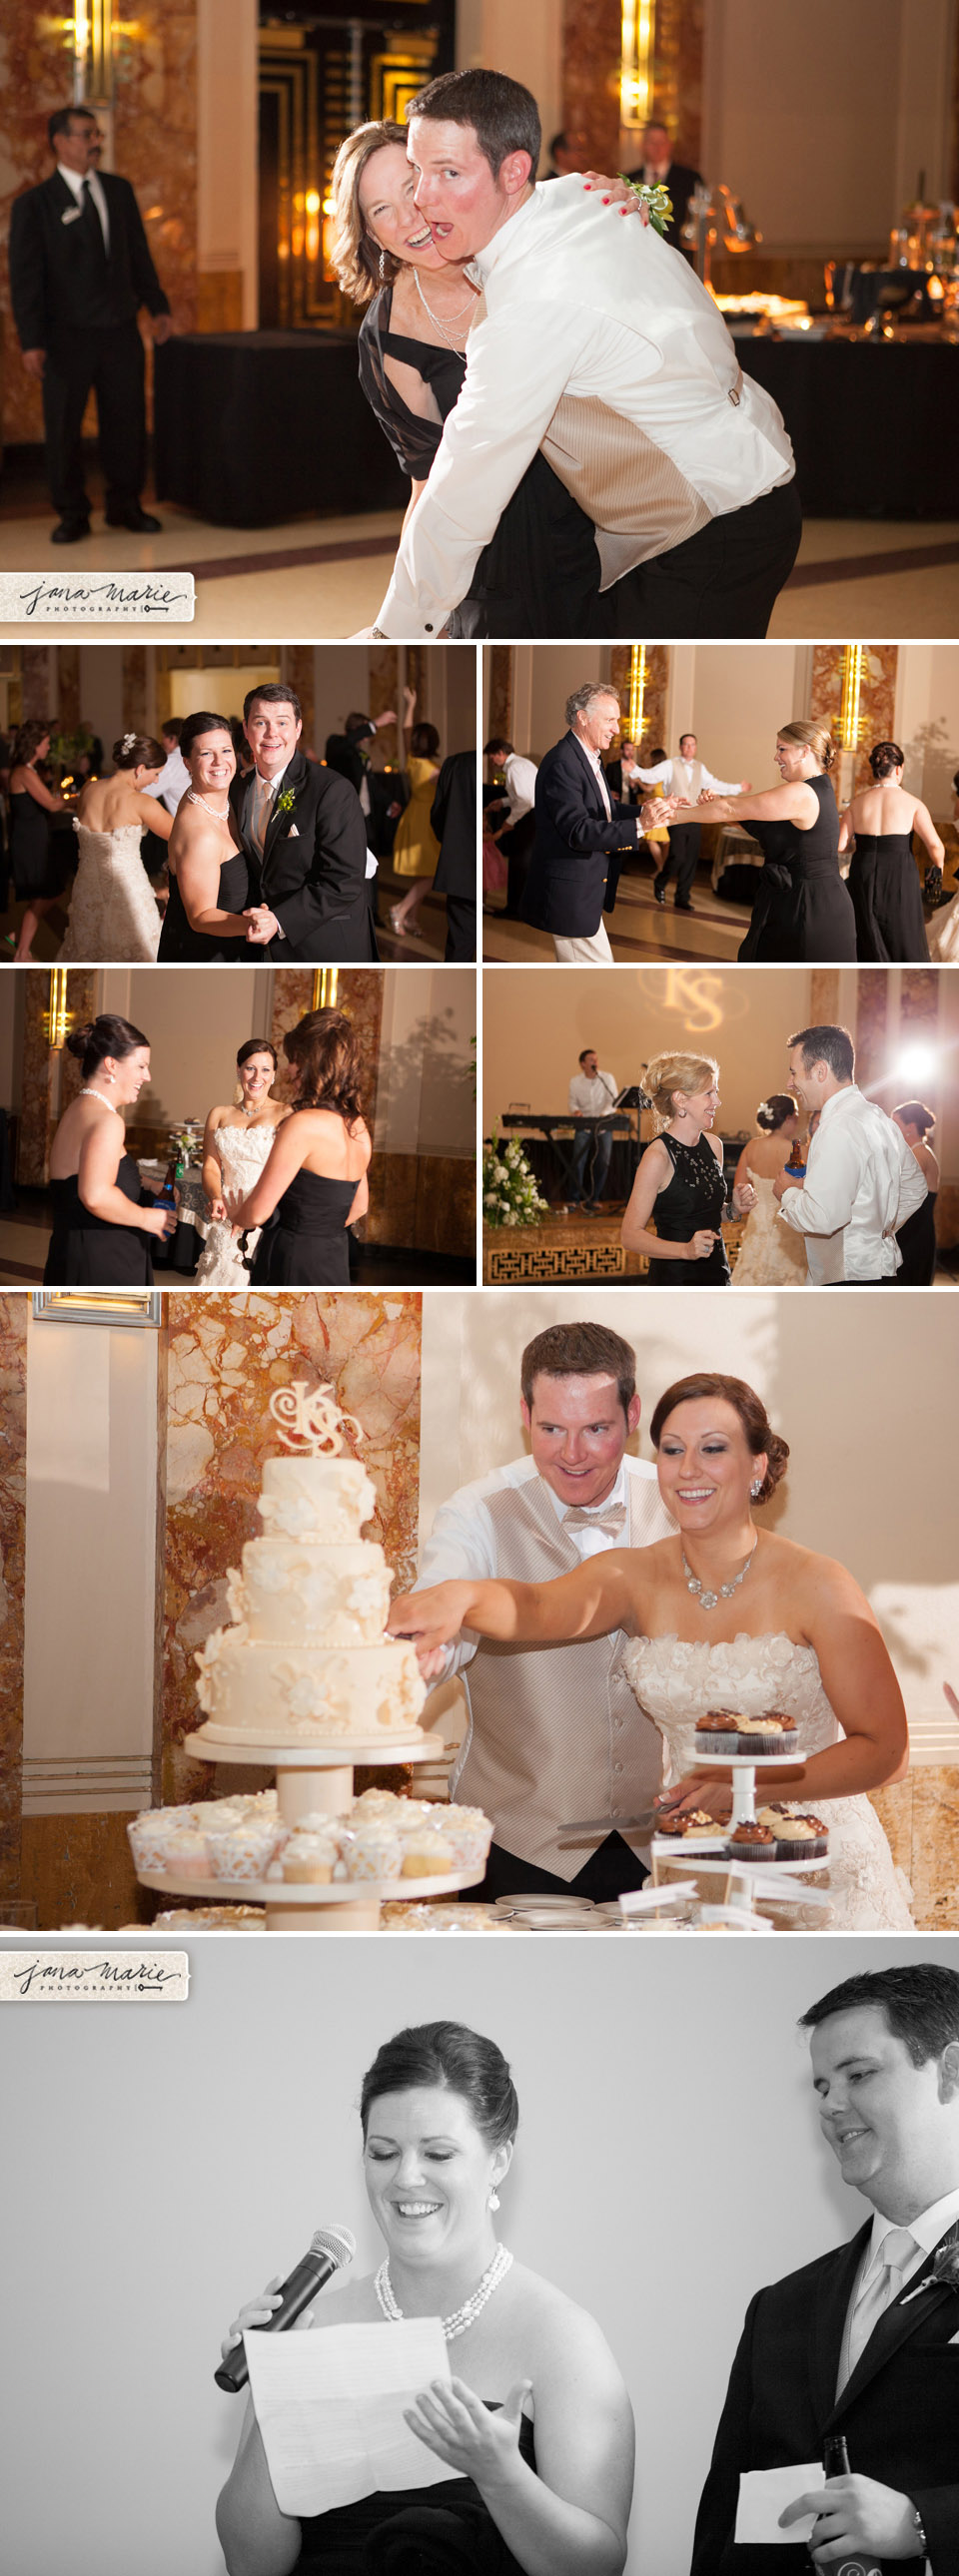 Cake cutting, bride and groom, reception dancing, Dave Merkel, Sarah Gettino, Owens family, Jana Maries Photography, KC weddings